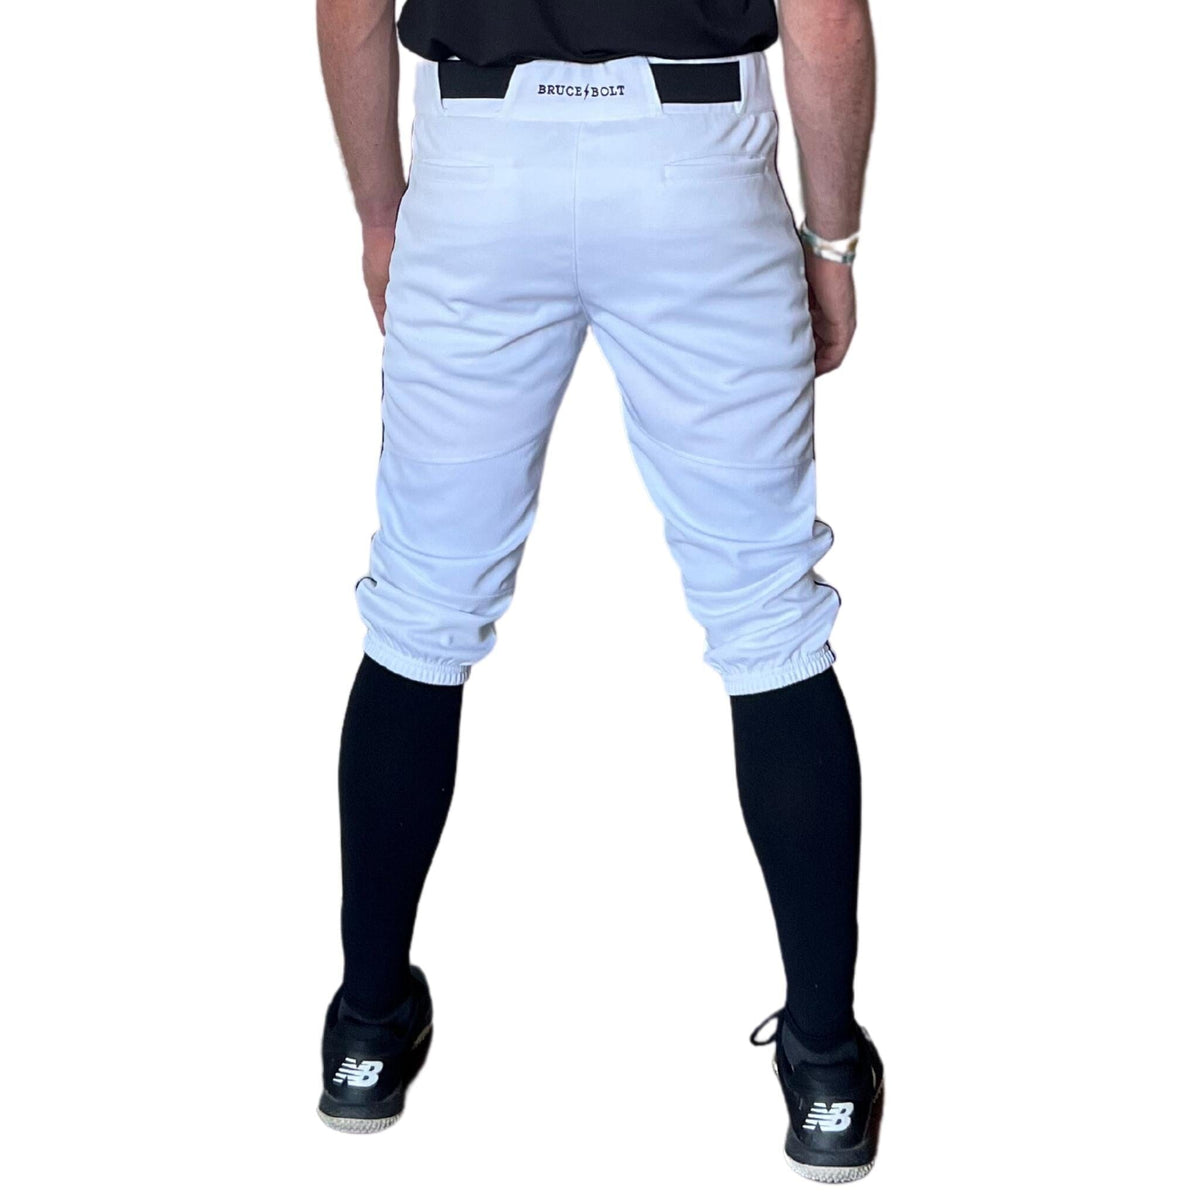 BRUCE BOLT Premium Pro Baseball Knicker - WHITE w/ Black